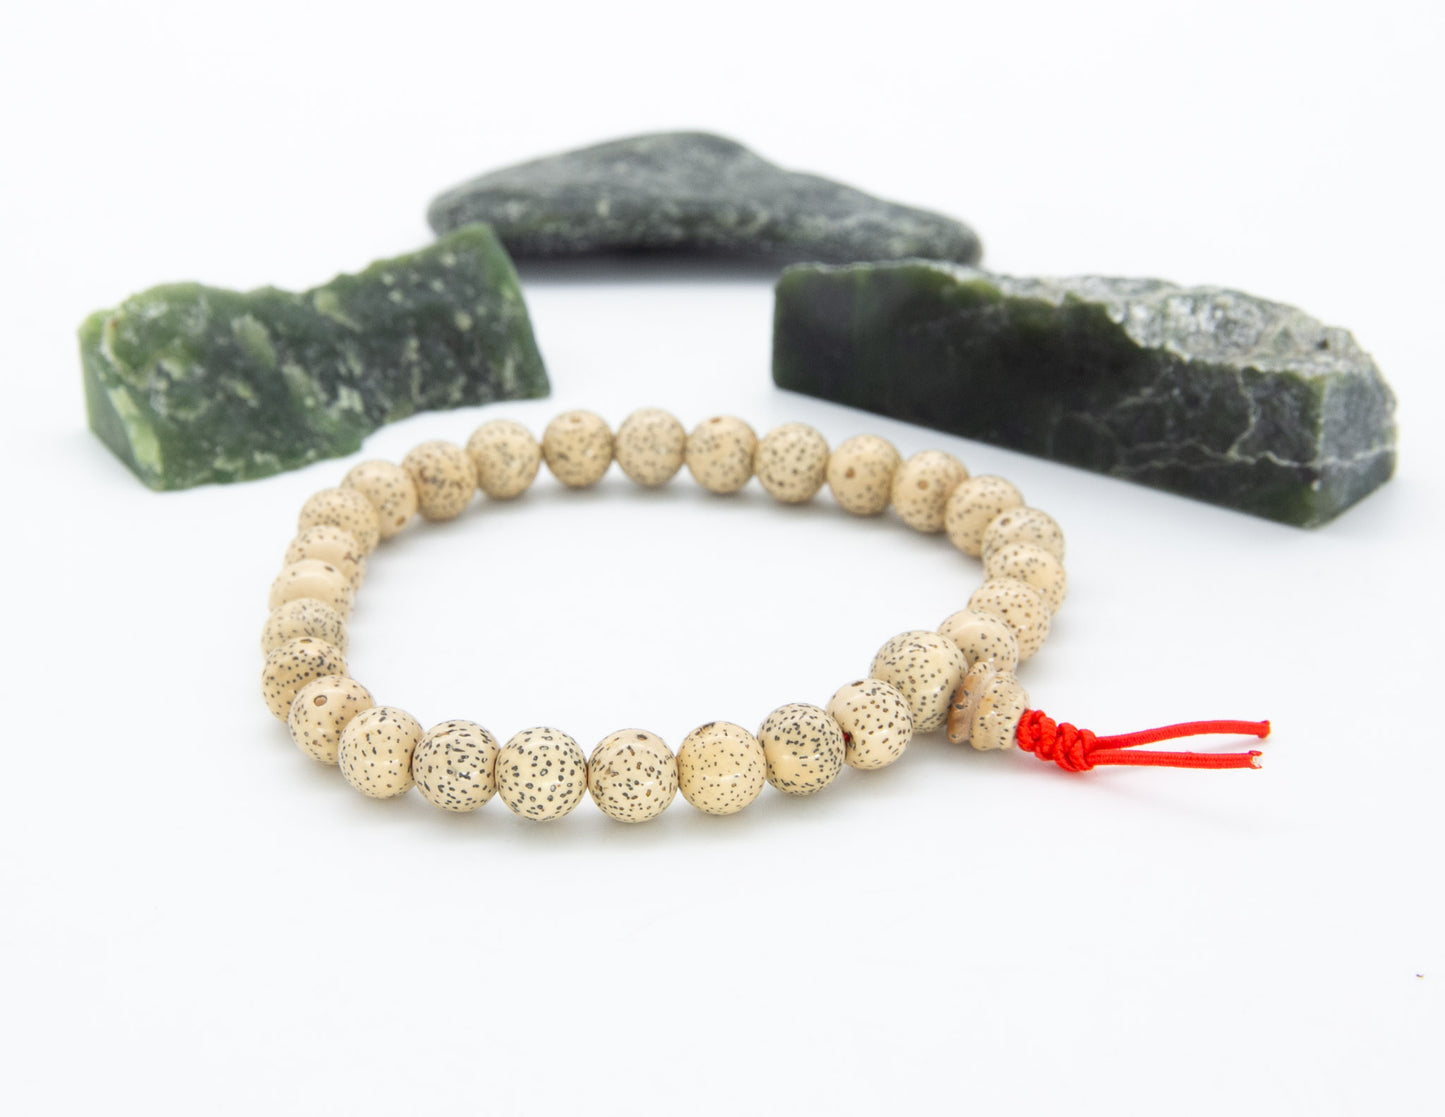 Lotus Seed Wrist Mala - 27 Beads